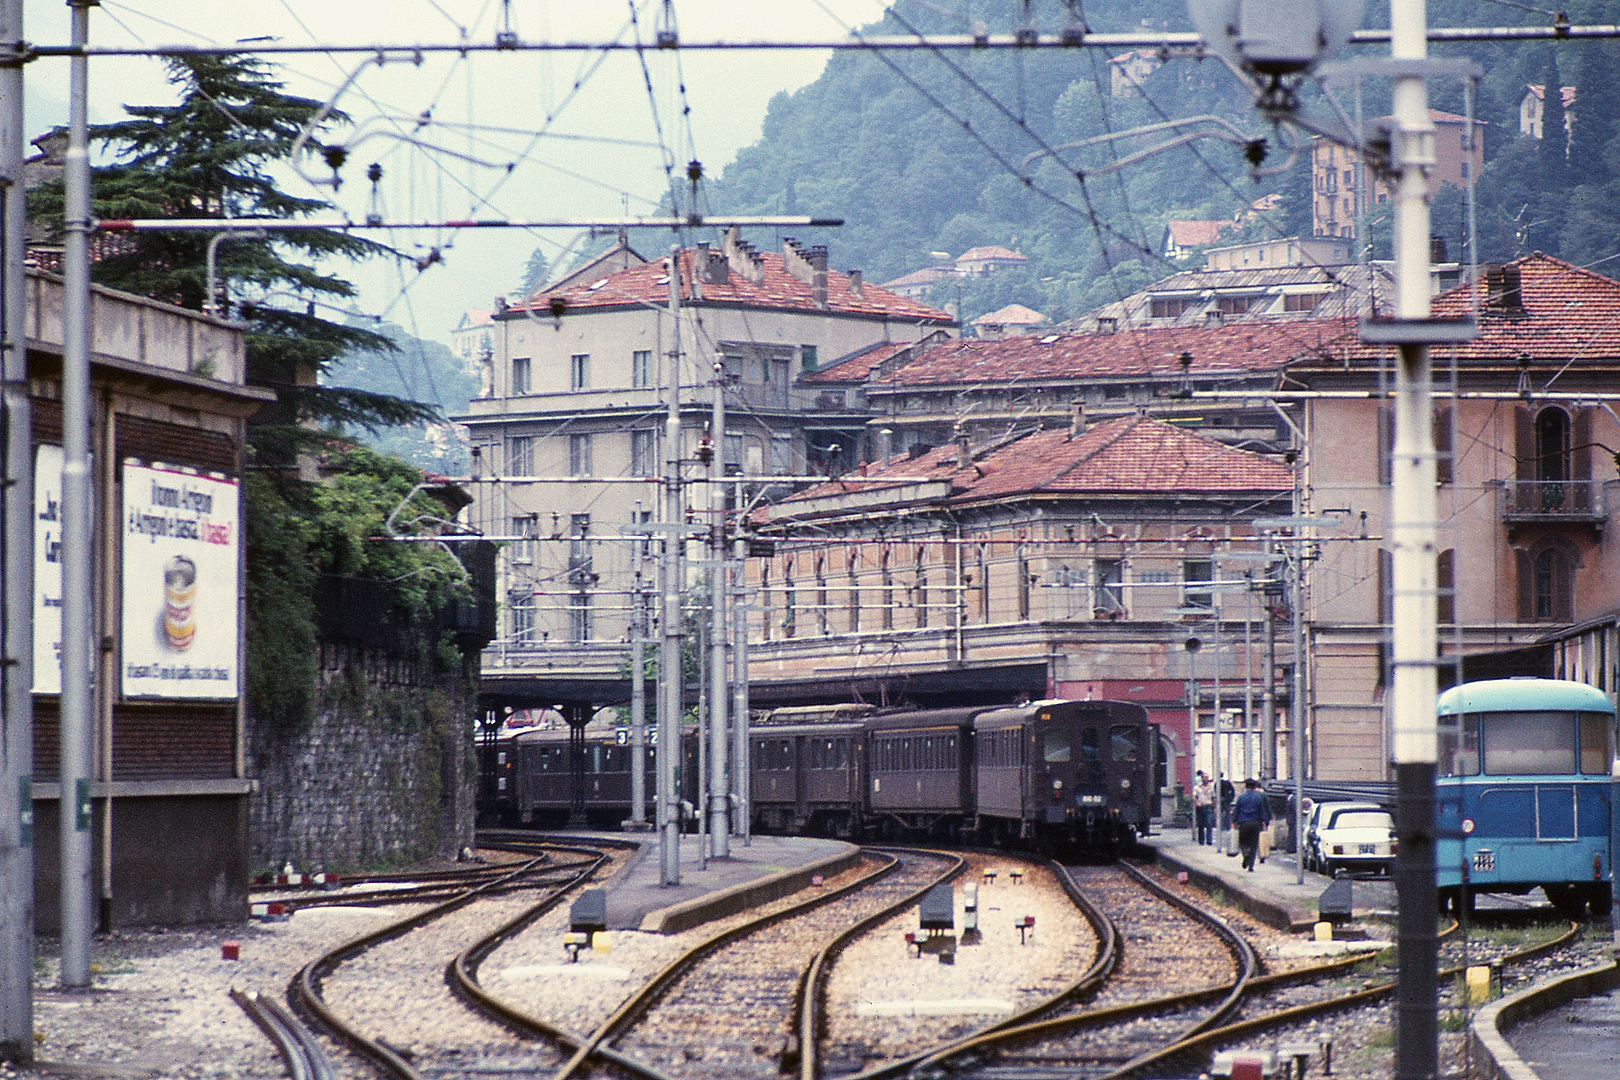 Station Como, Como railway station, Lombardy. Italy